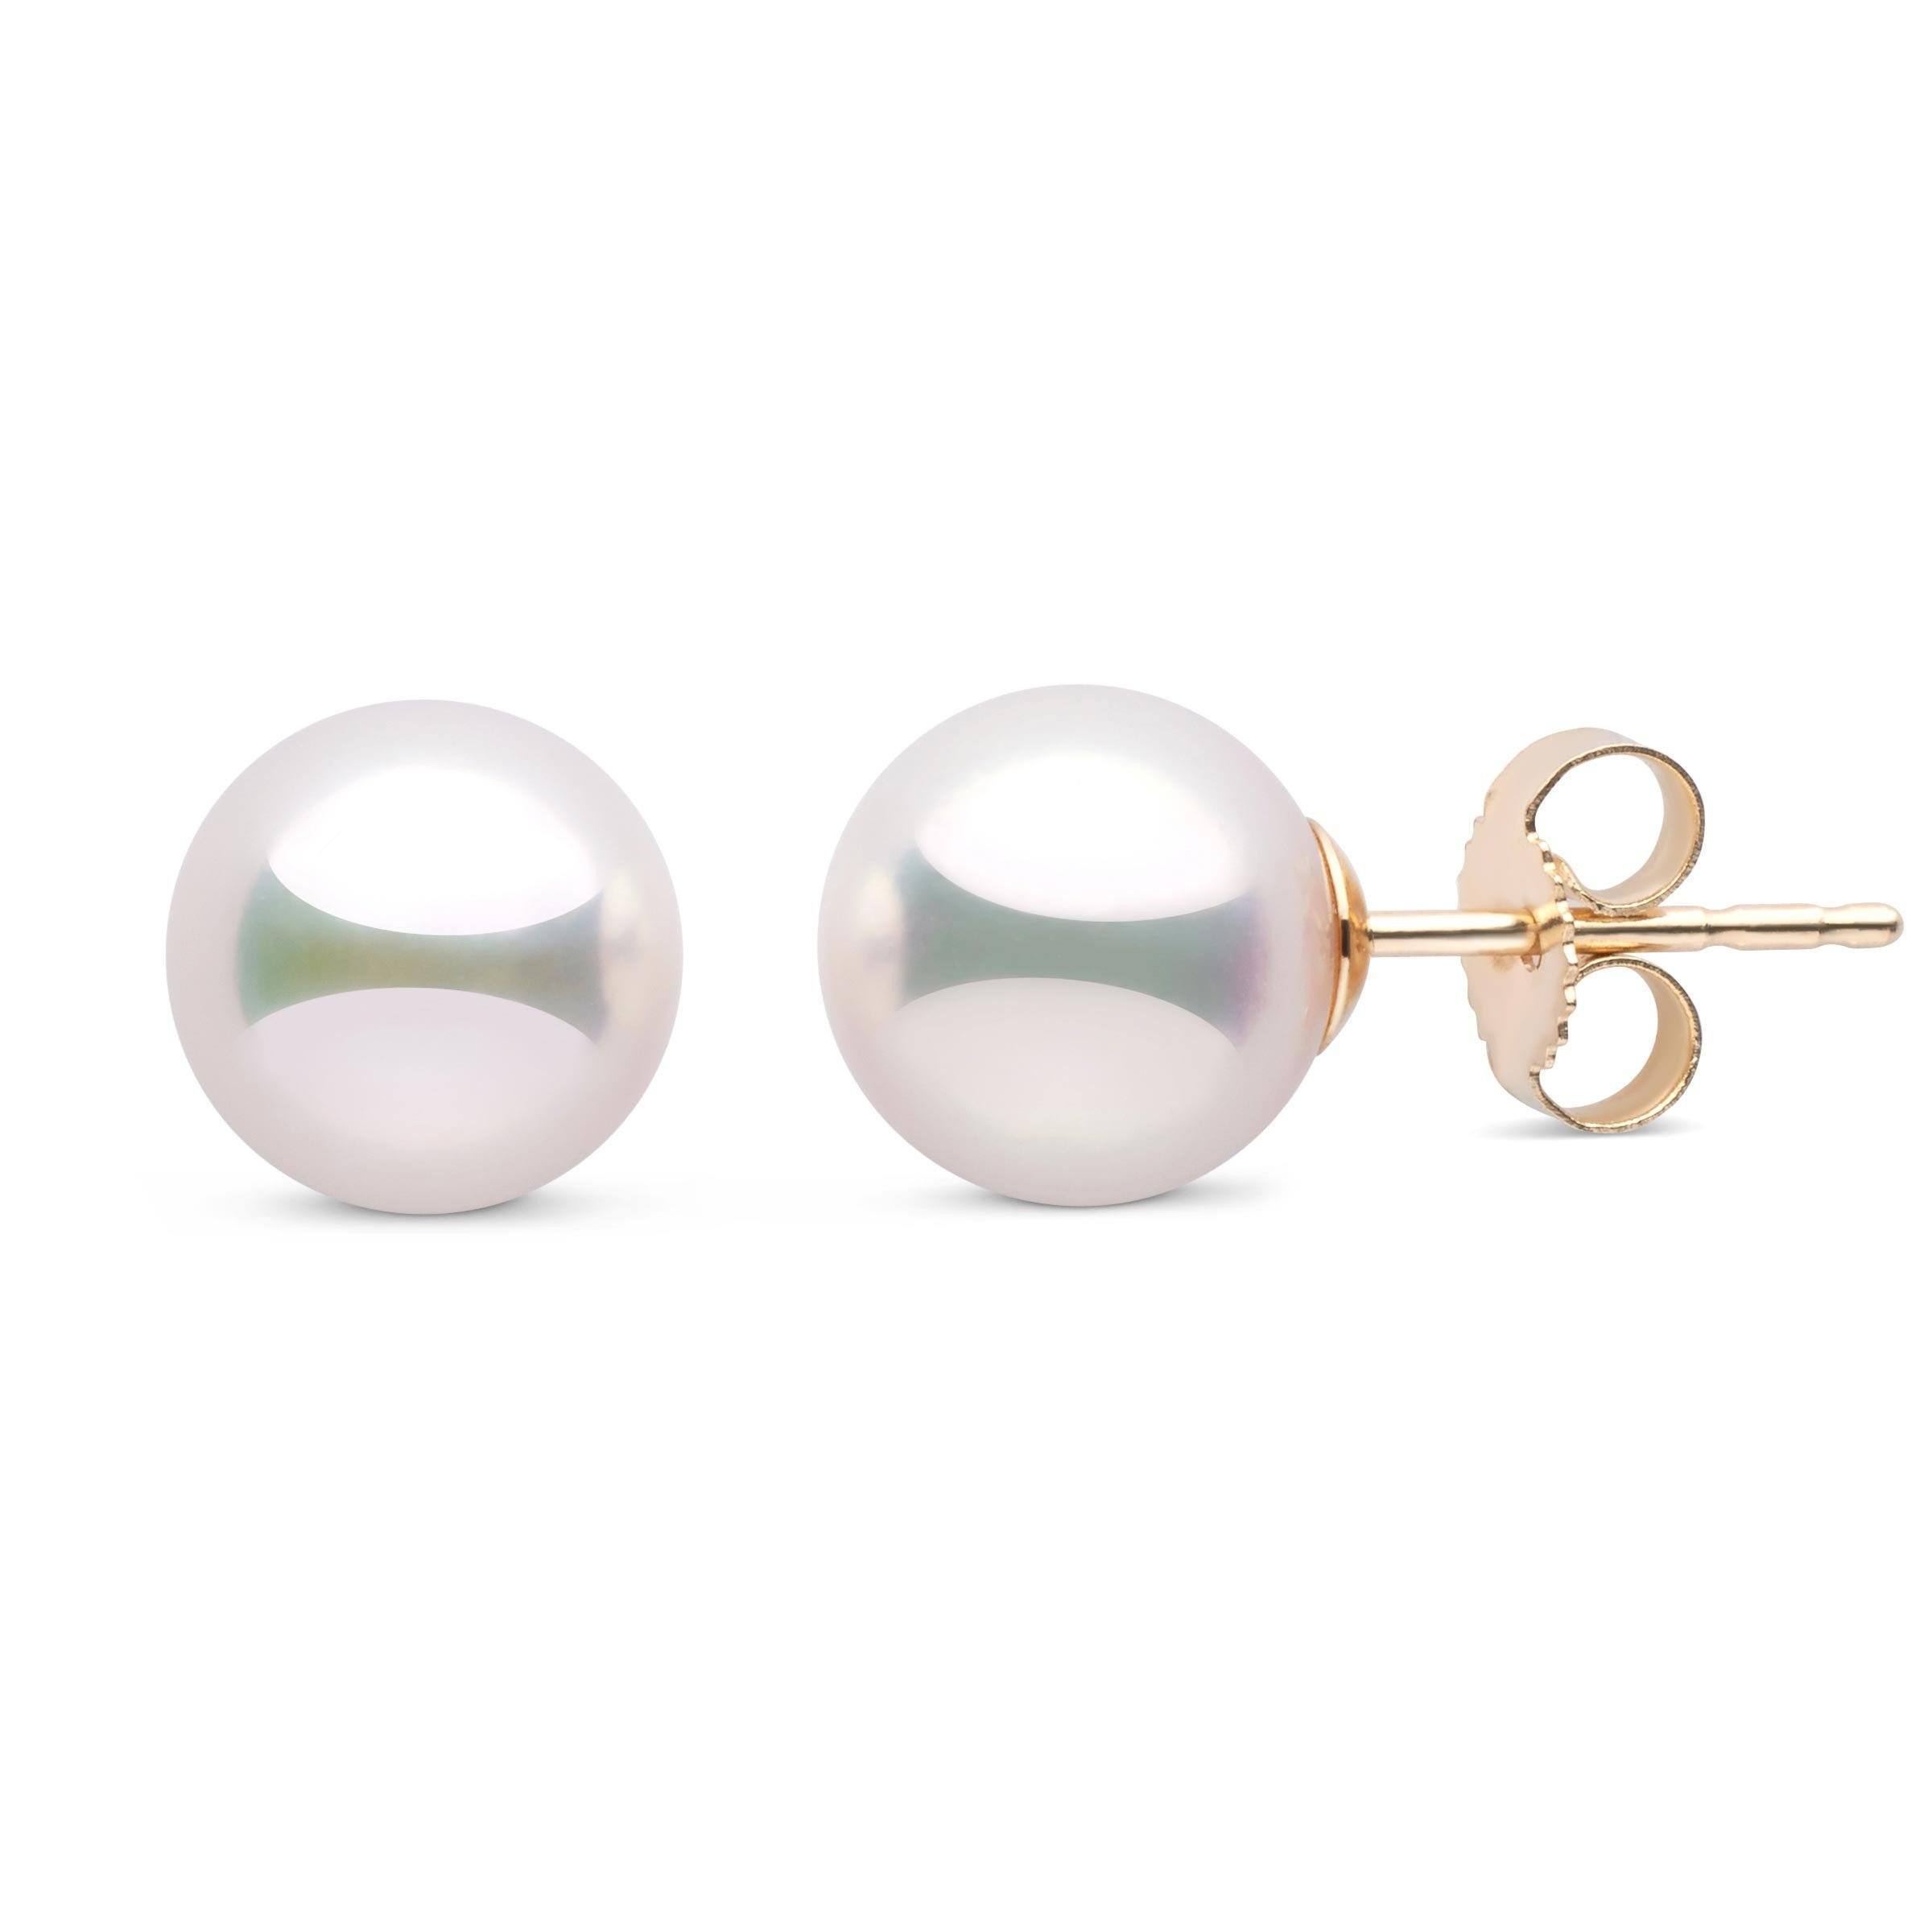 8.0-8.5 mm White Hanadama Pearl Stud Earrings